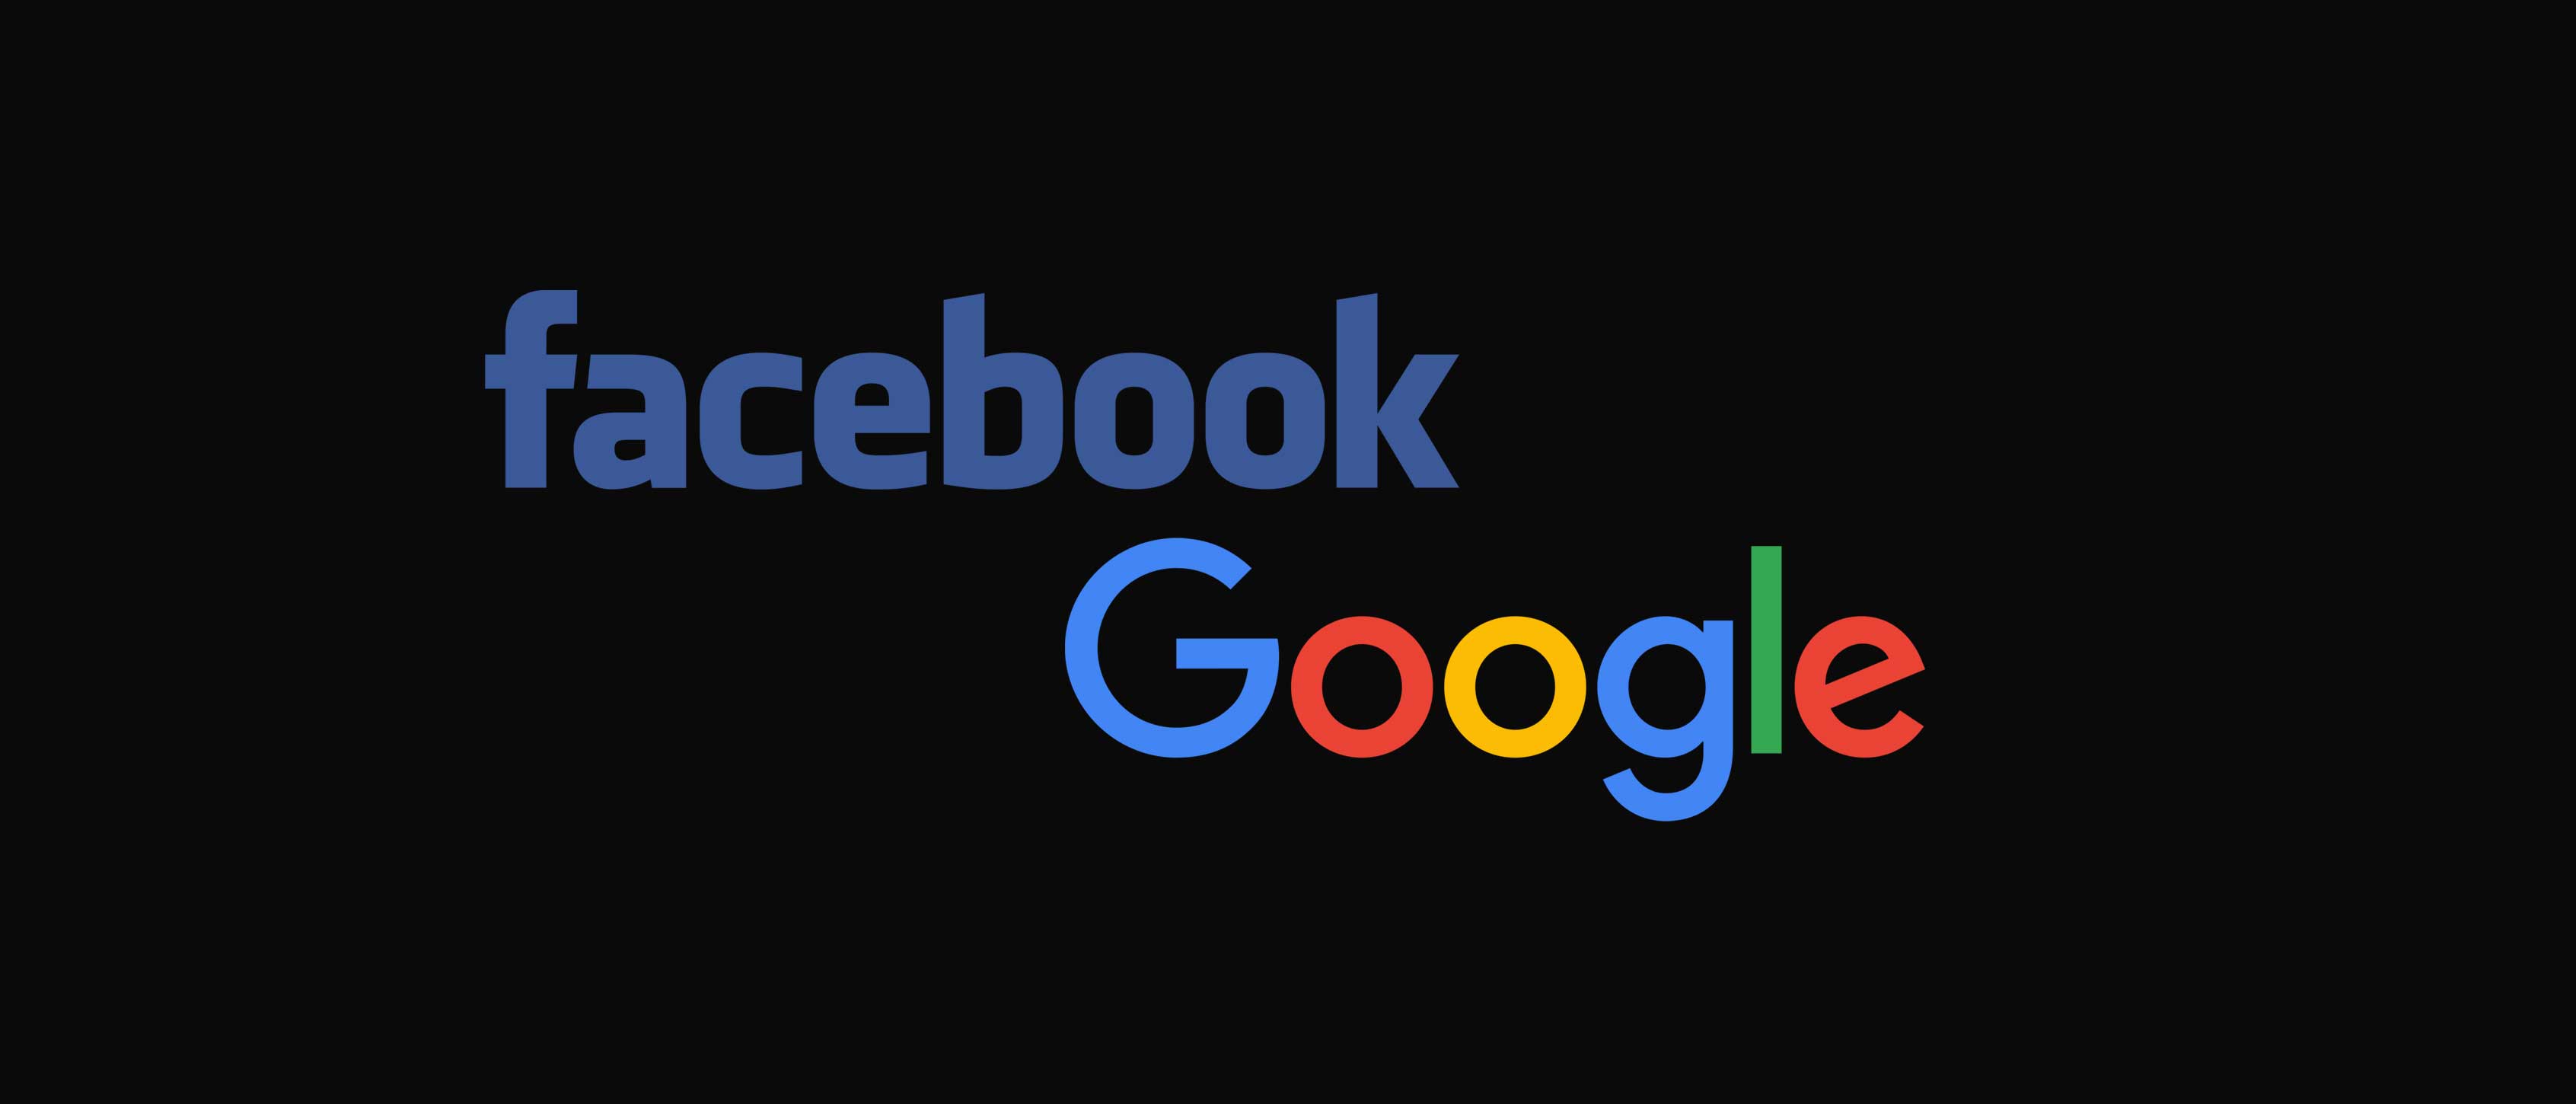 facebook and google logos